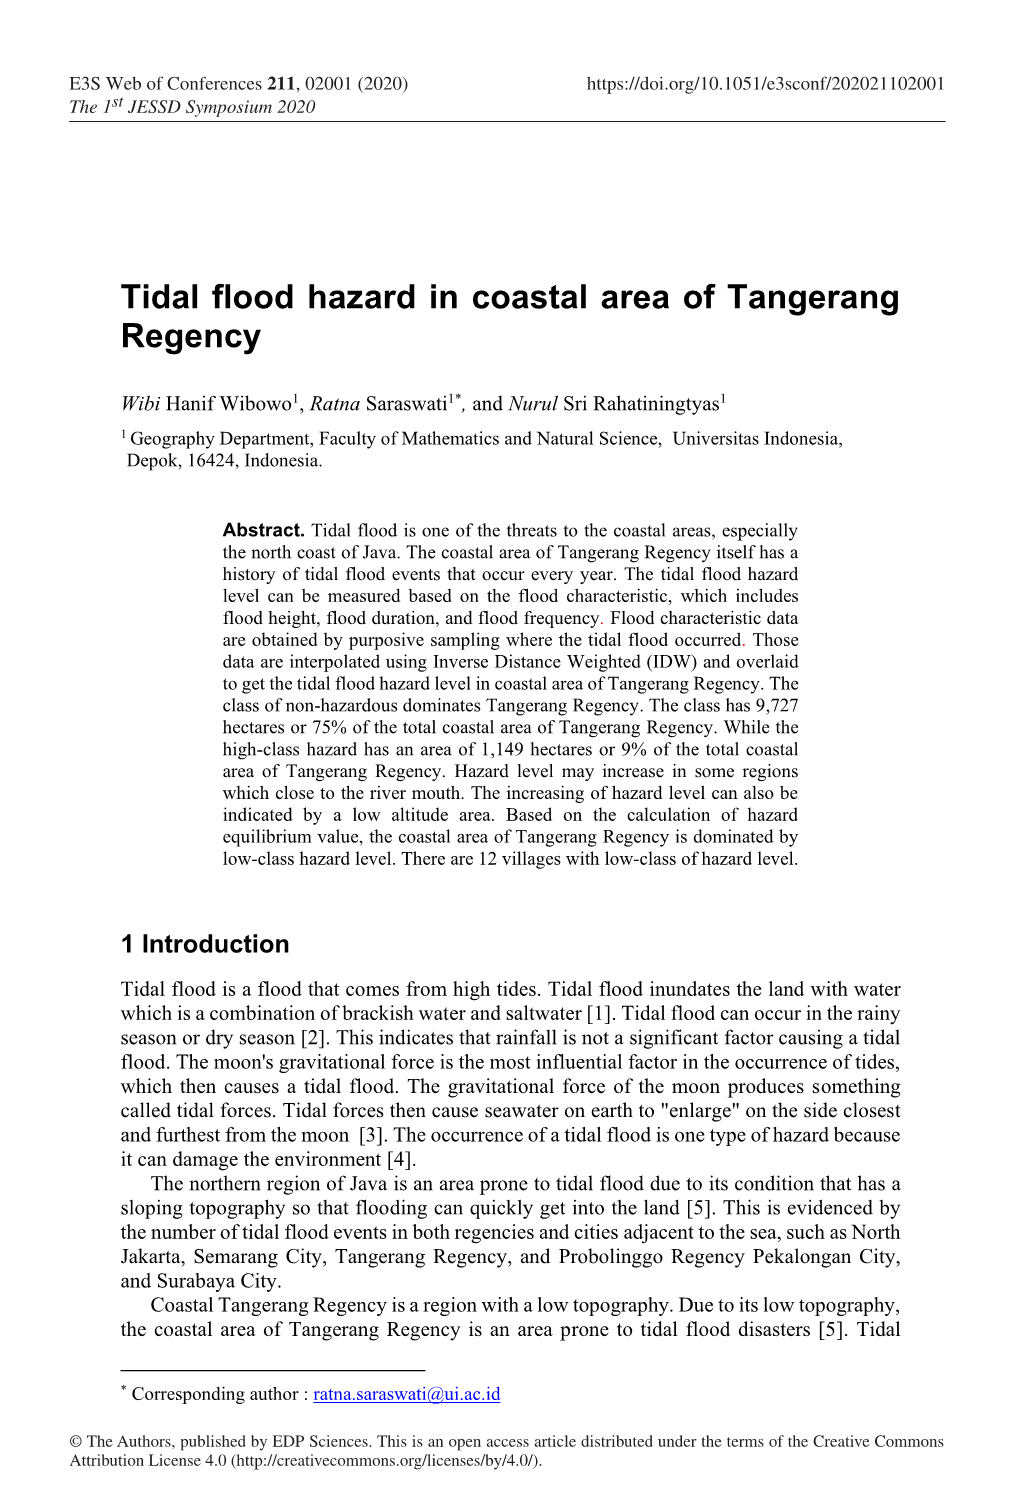 Tidal Flood Hazard in Coastal Area of Tangerang Regency